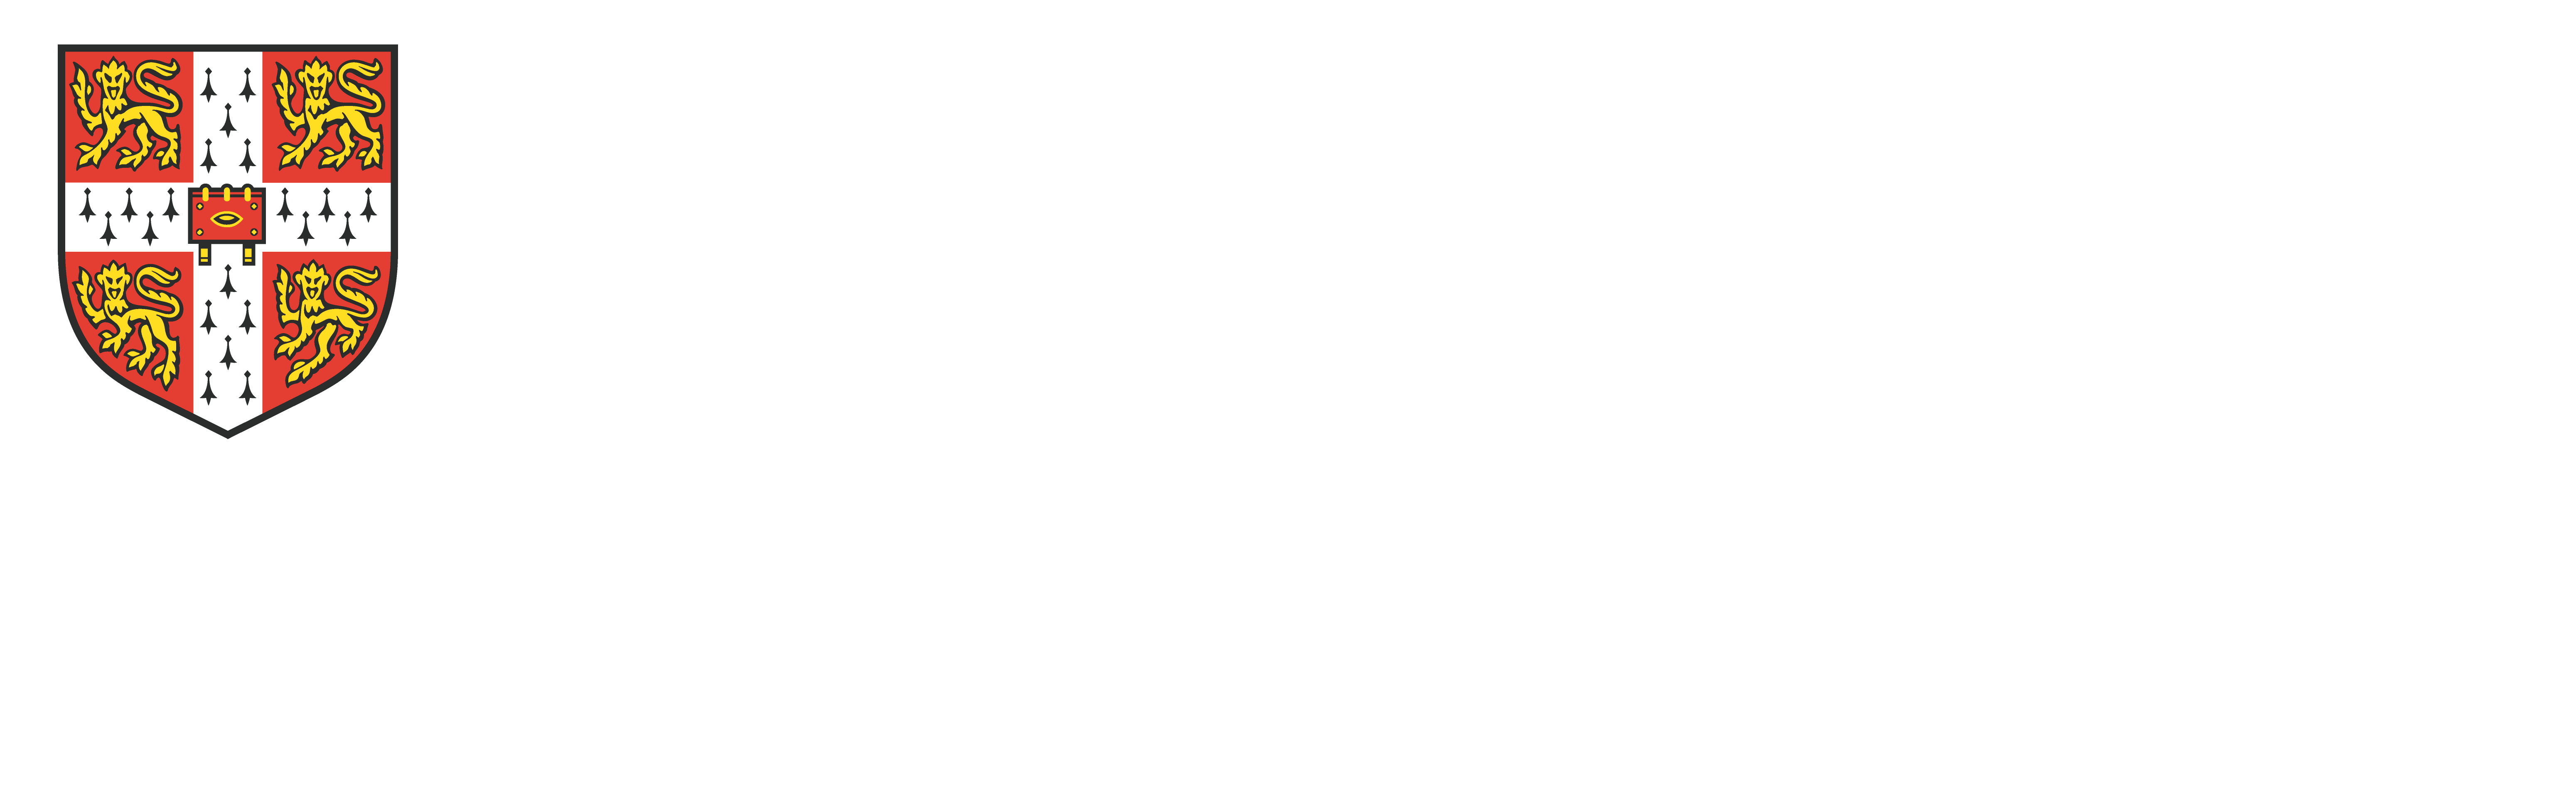 Cambridge assessment international education